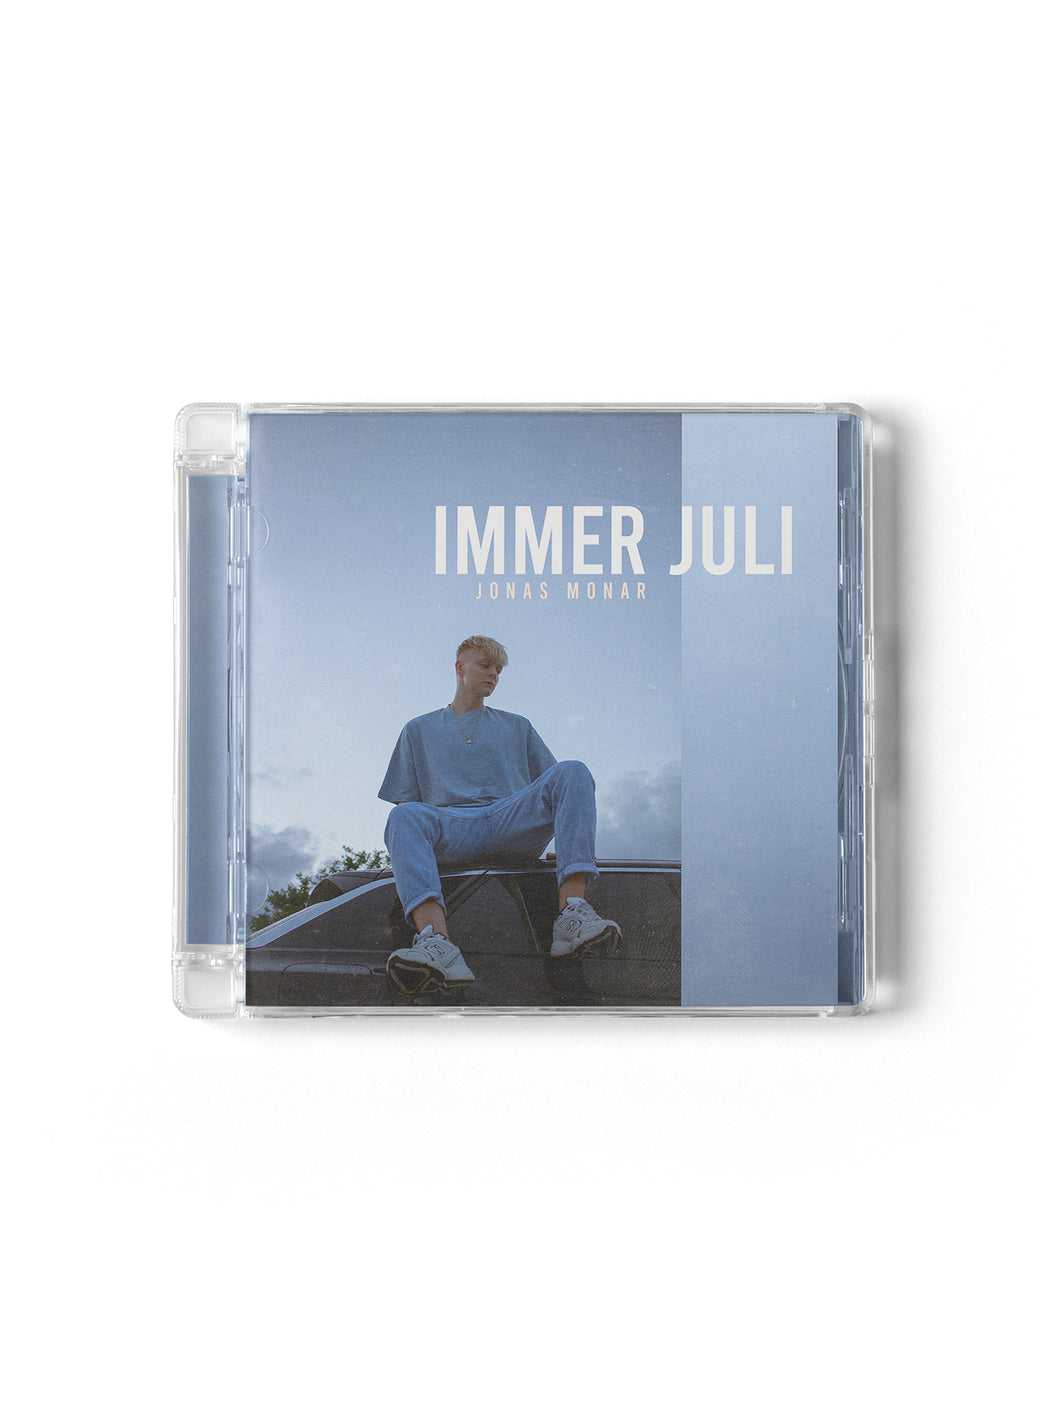 CD - IMMER JULI SIGNIERT